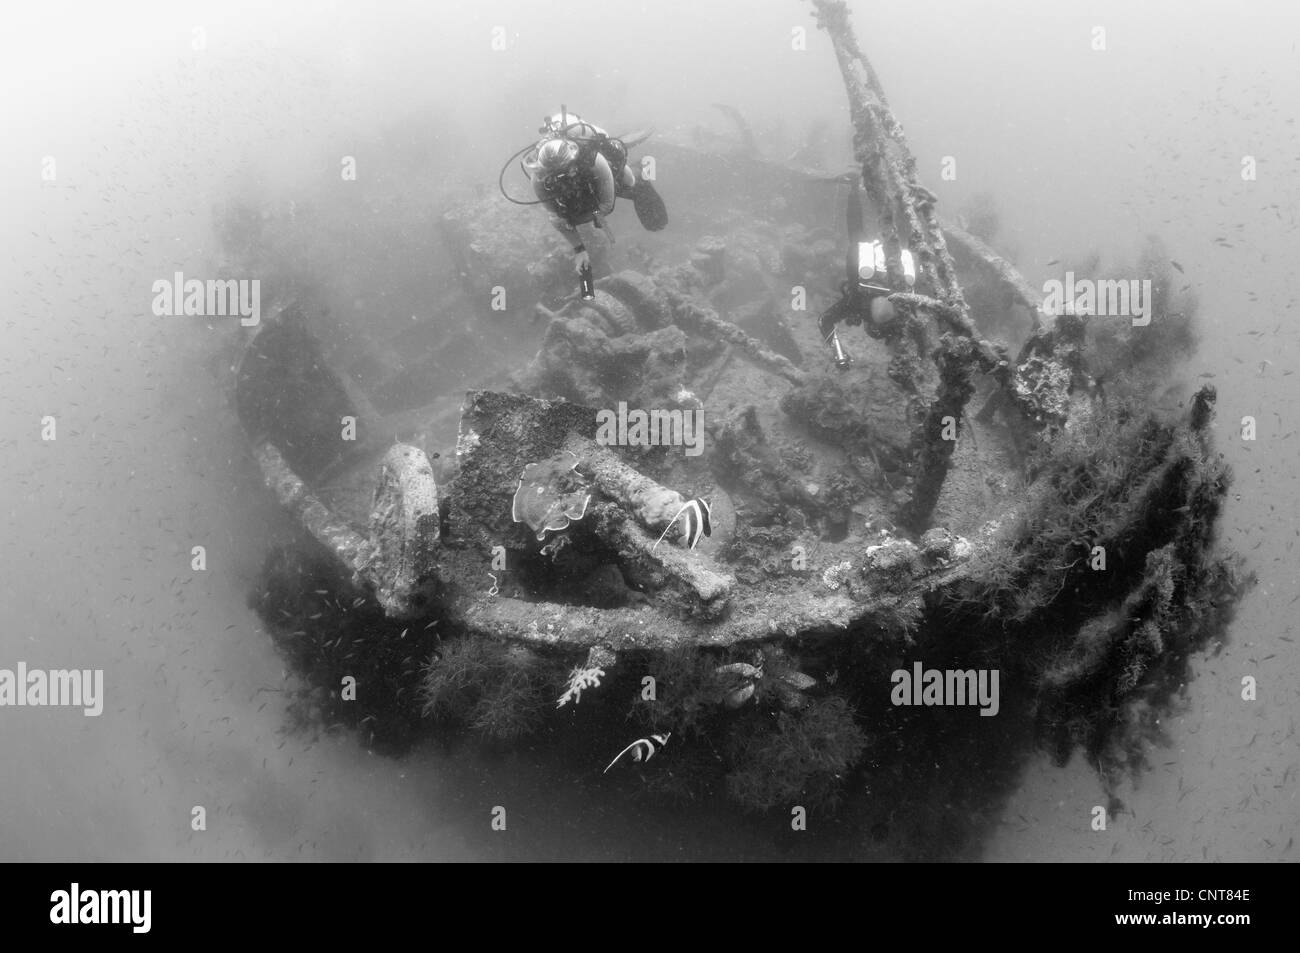 Scuba divers explore the wreck of a Japanese Maru warship sunk during World War 2, Morovo Lagoon, Solomon Islands. Stock Photo